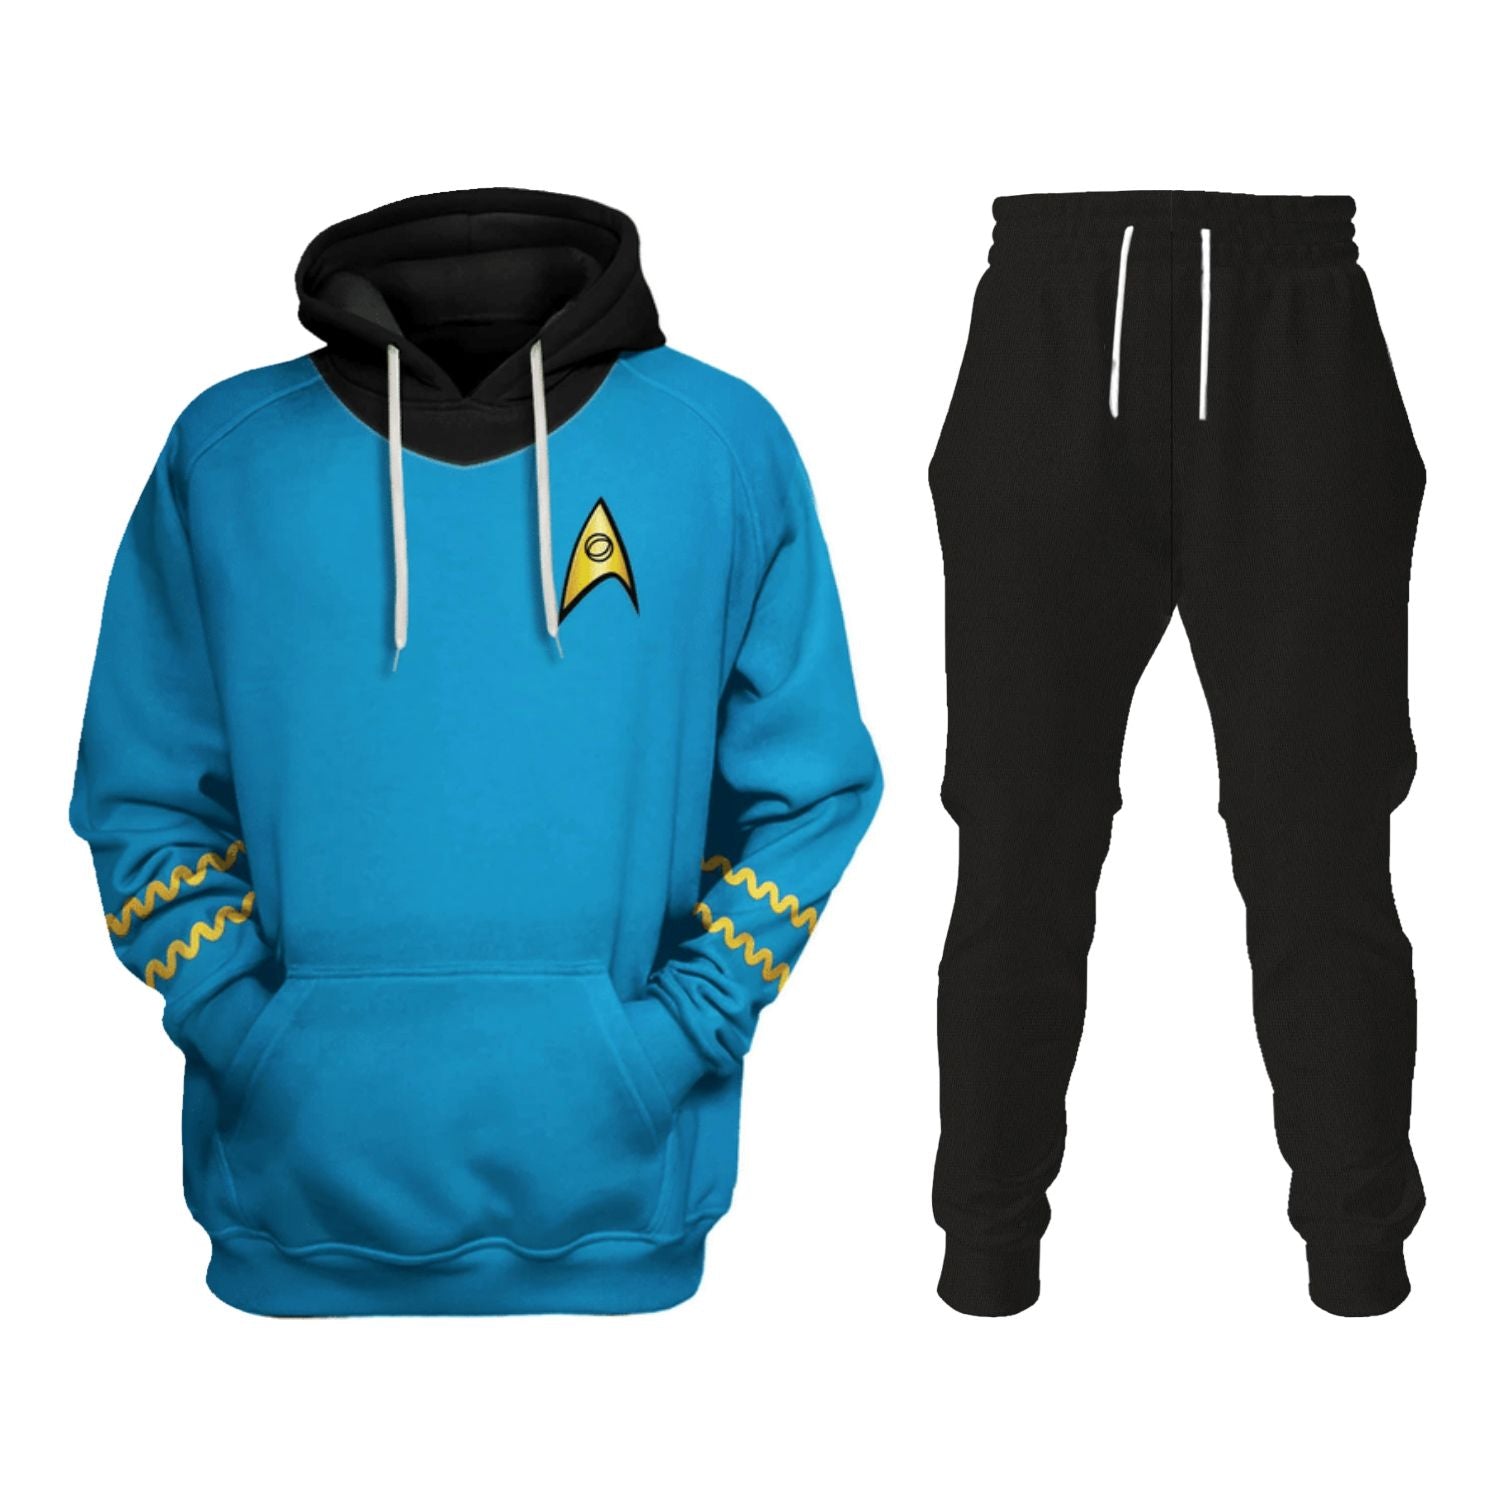 The Original Series Spock Blue track suit 